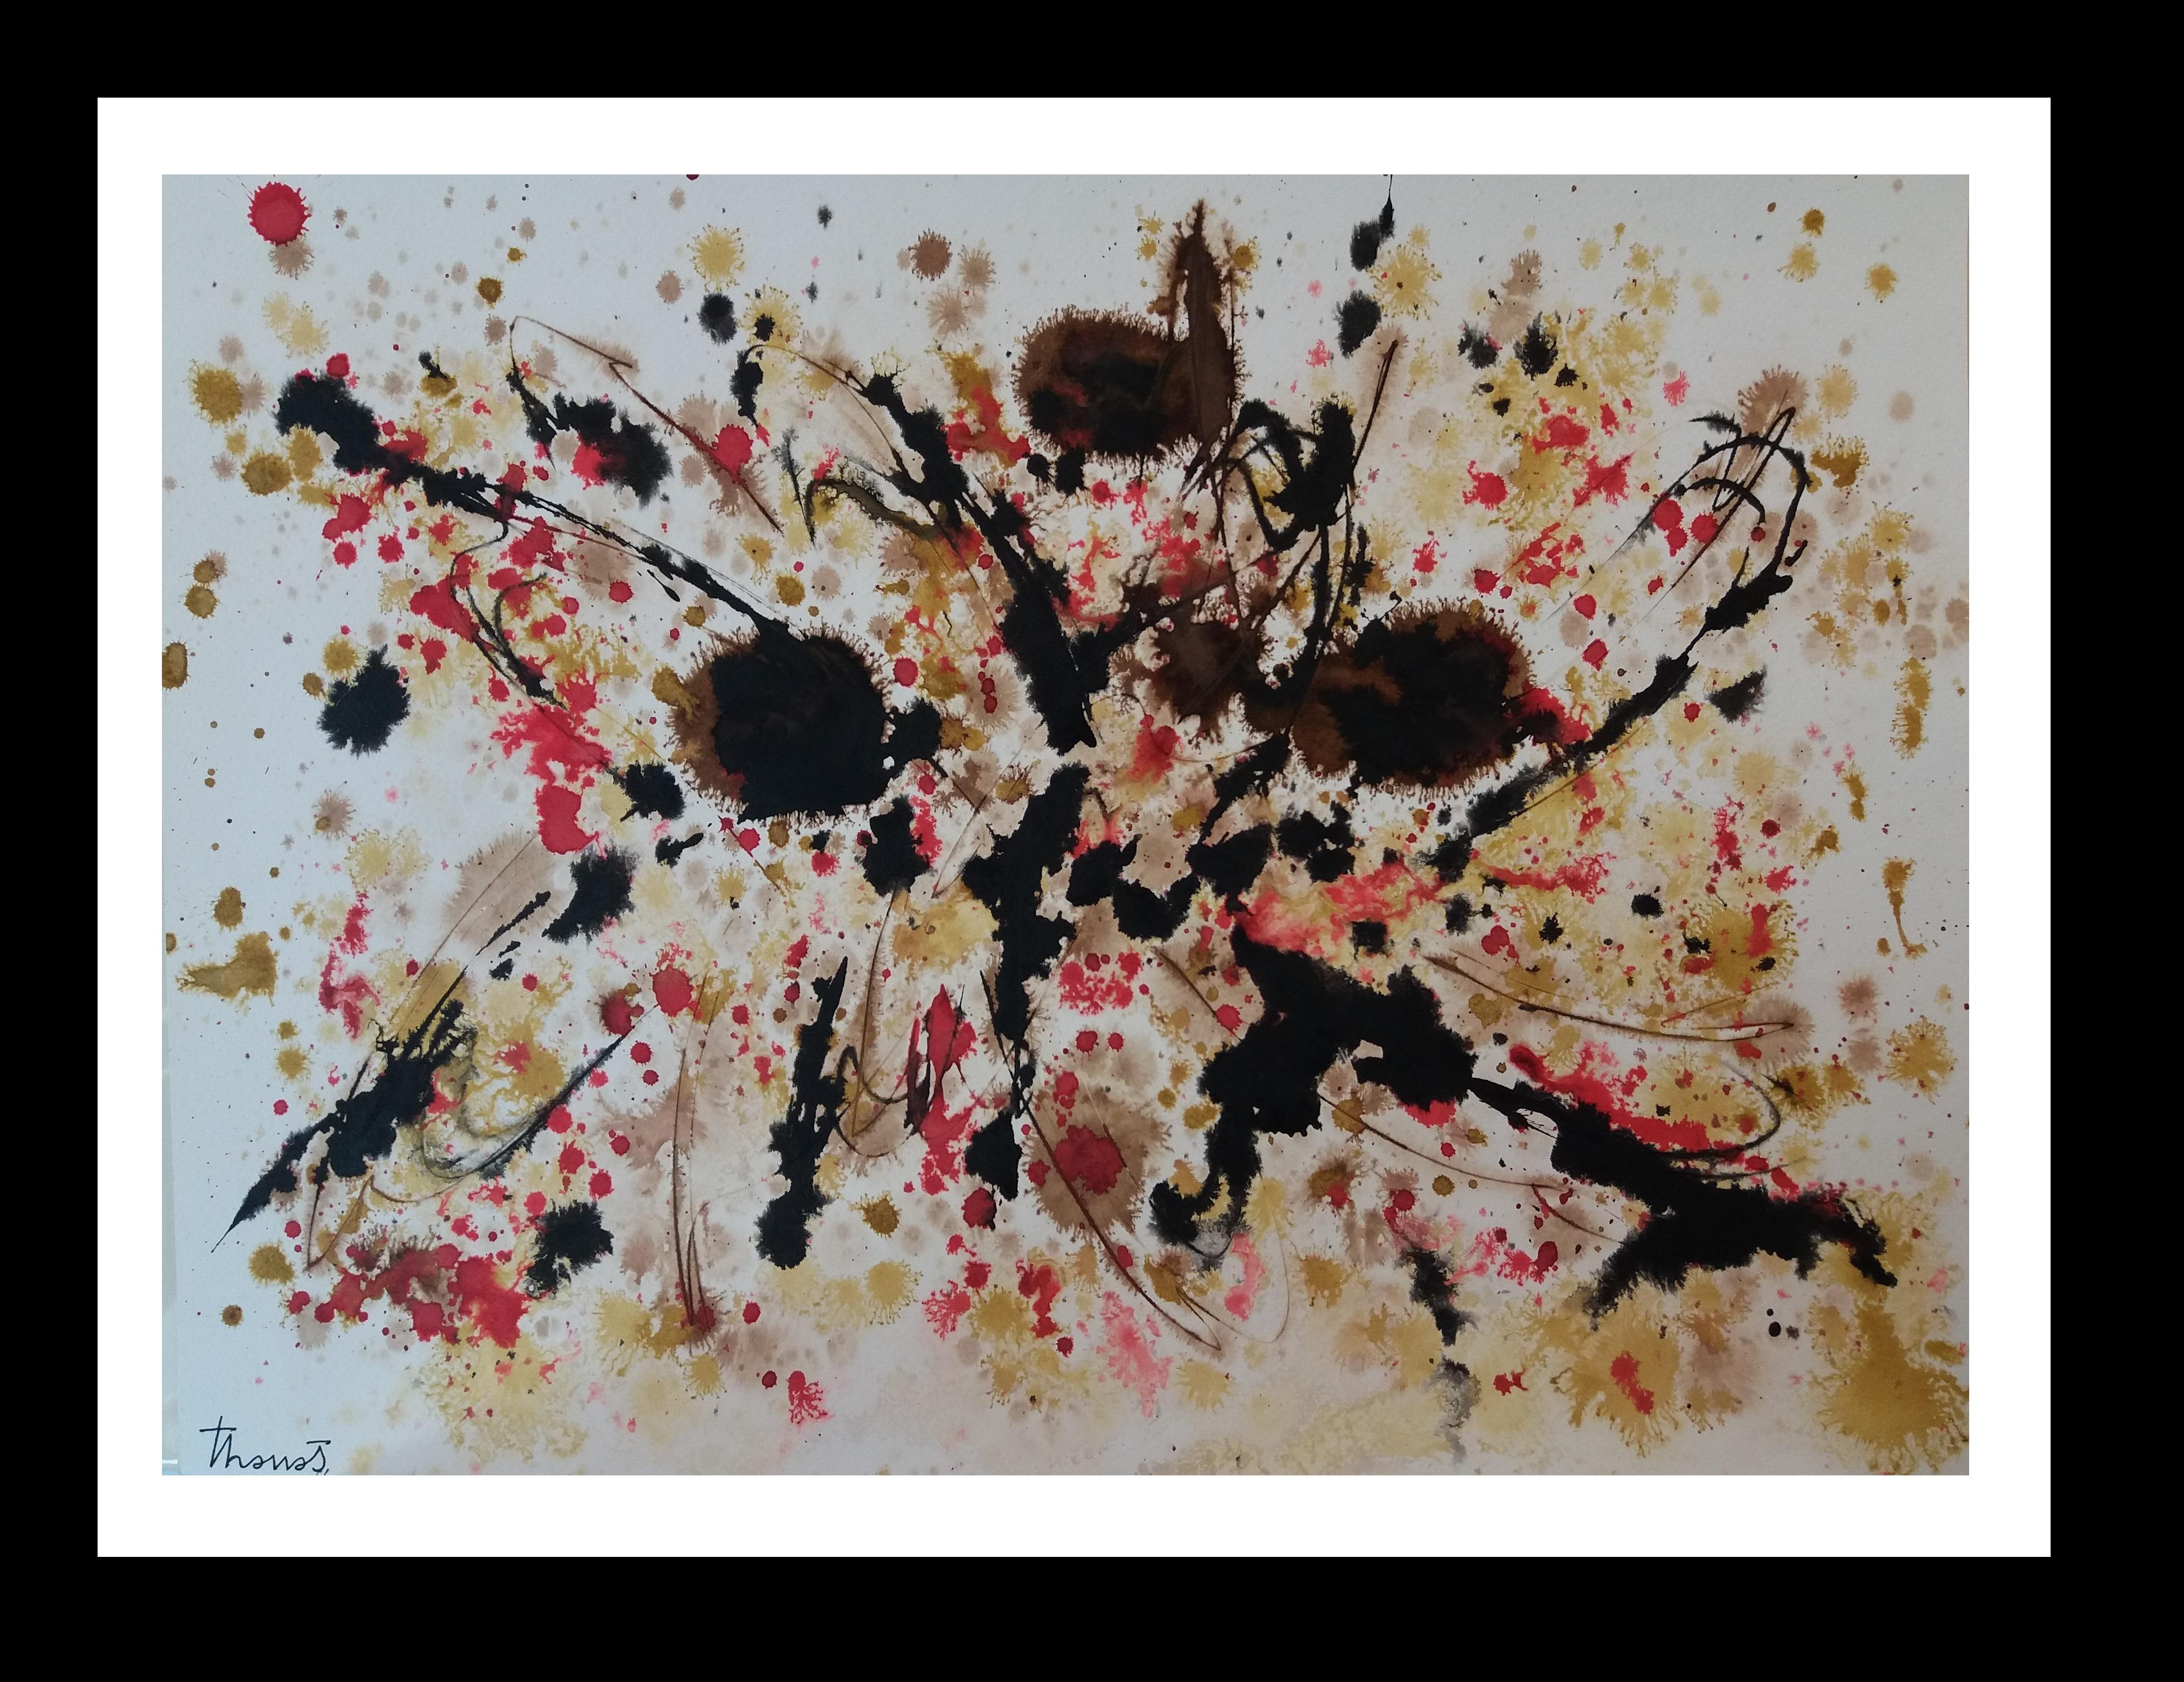 Josep THARRATS Abstract Painting - Tharrats 9.1  Black  Constellation 20  original abstract acrylic paper painting